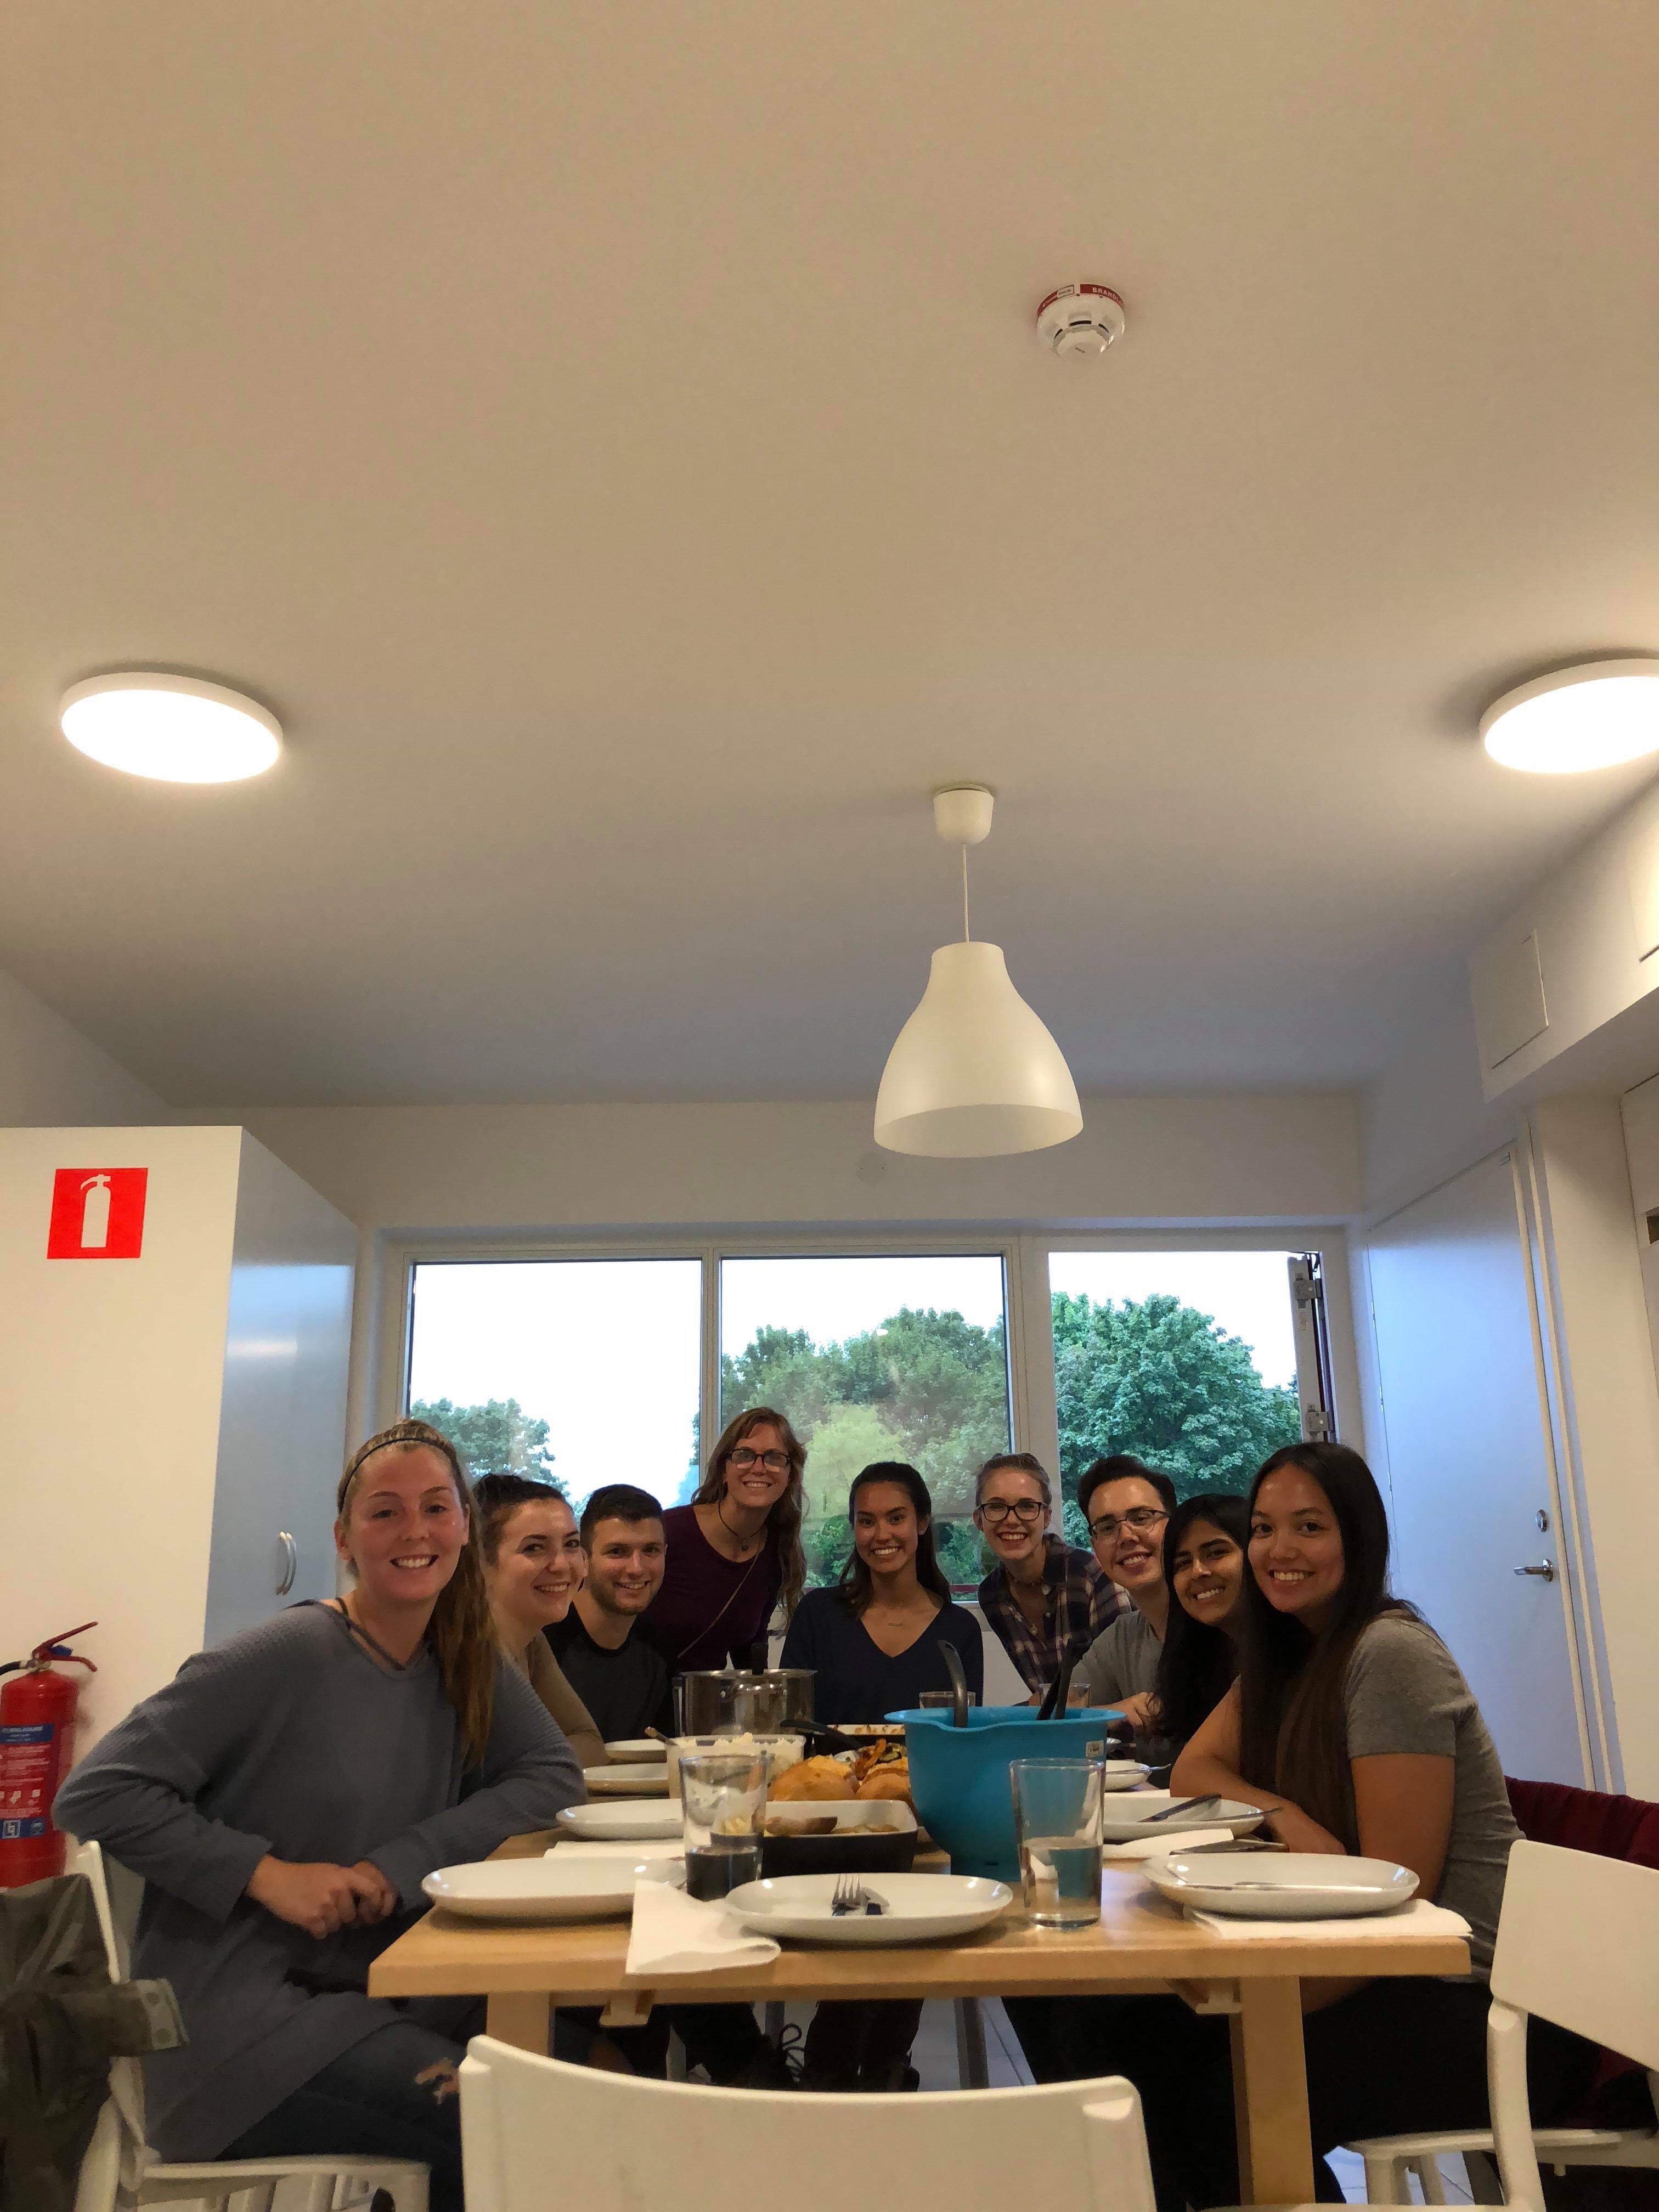 Friends having dinner at Lund University